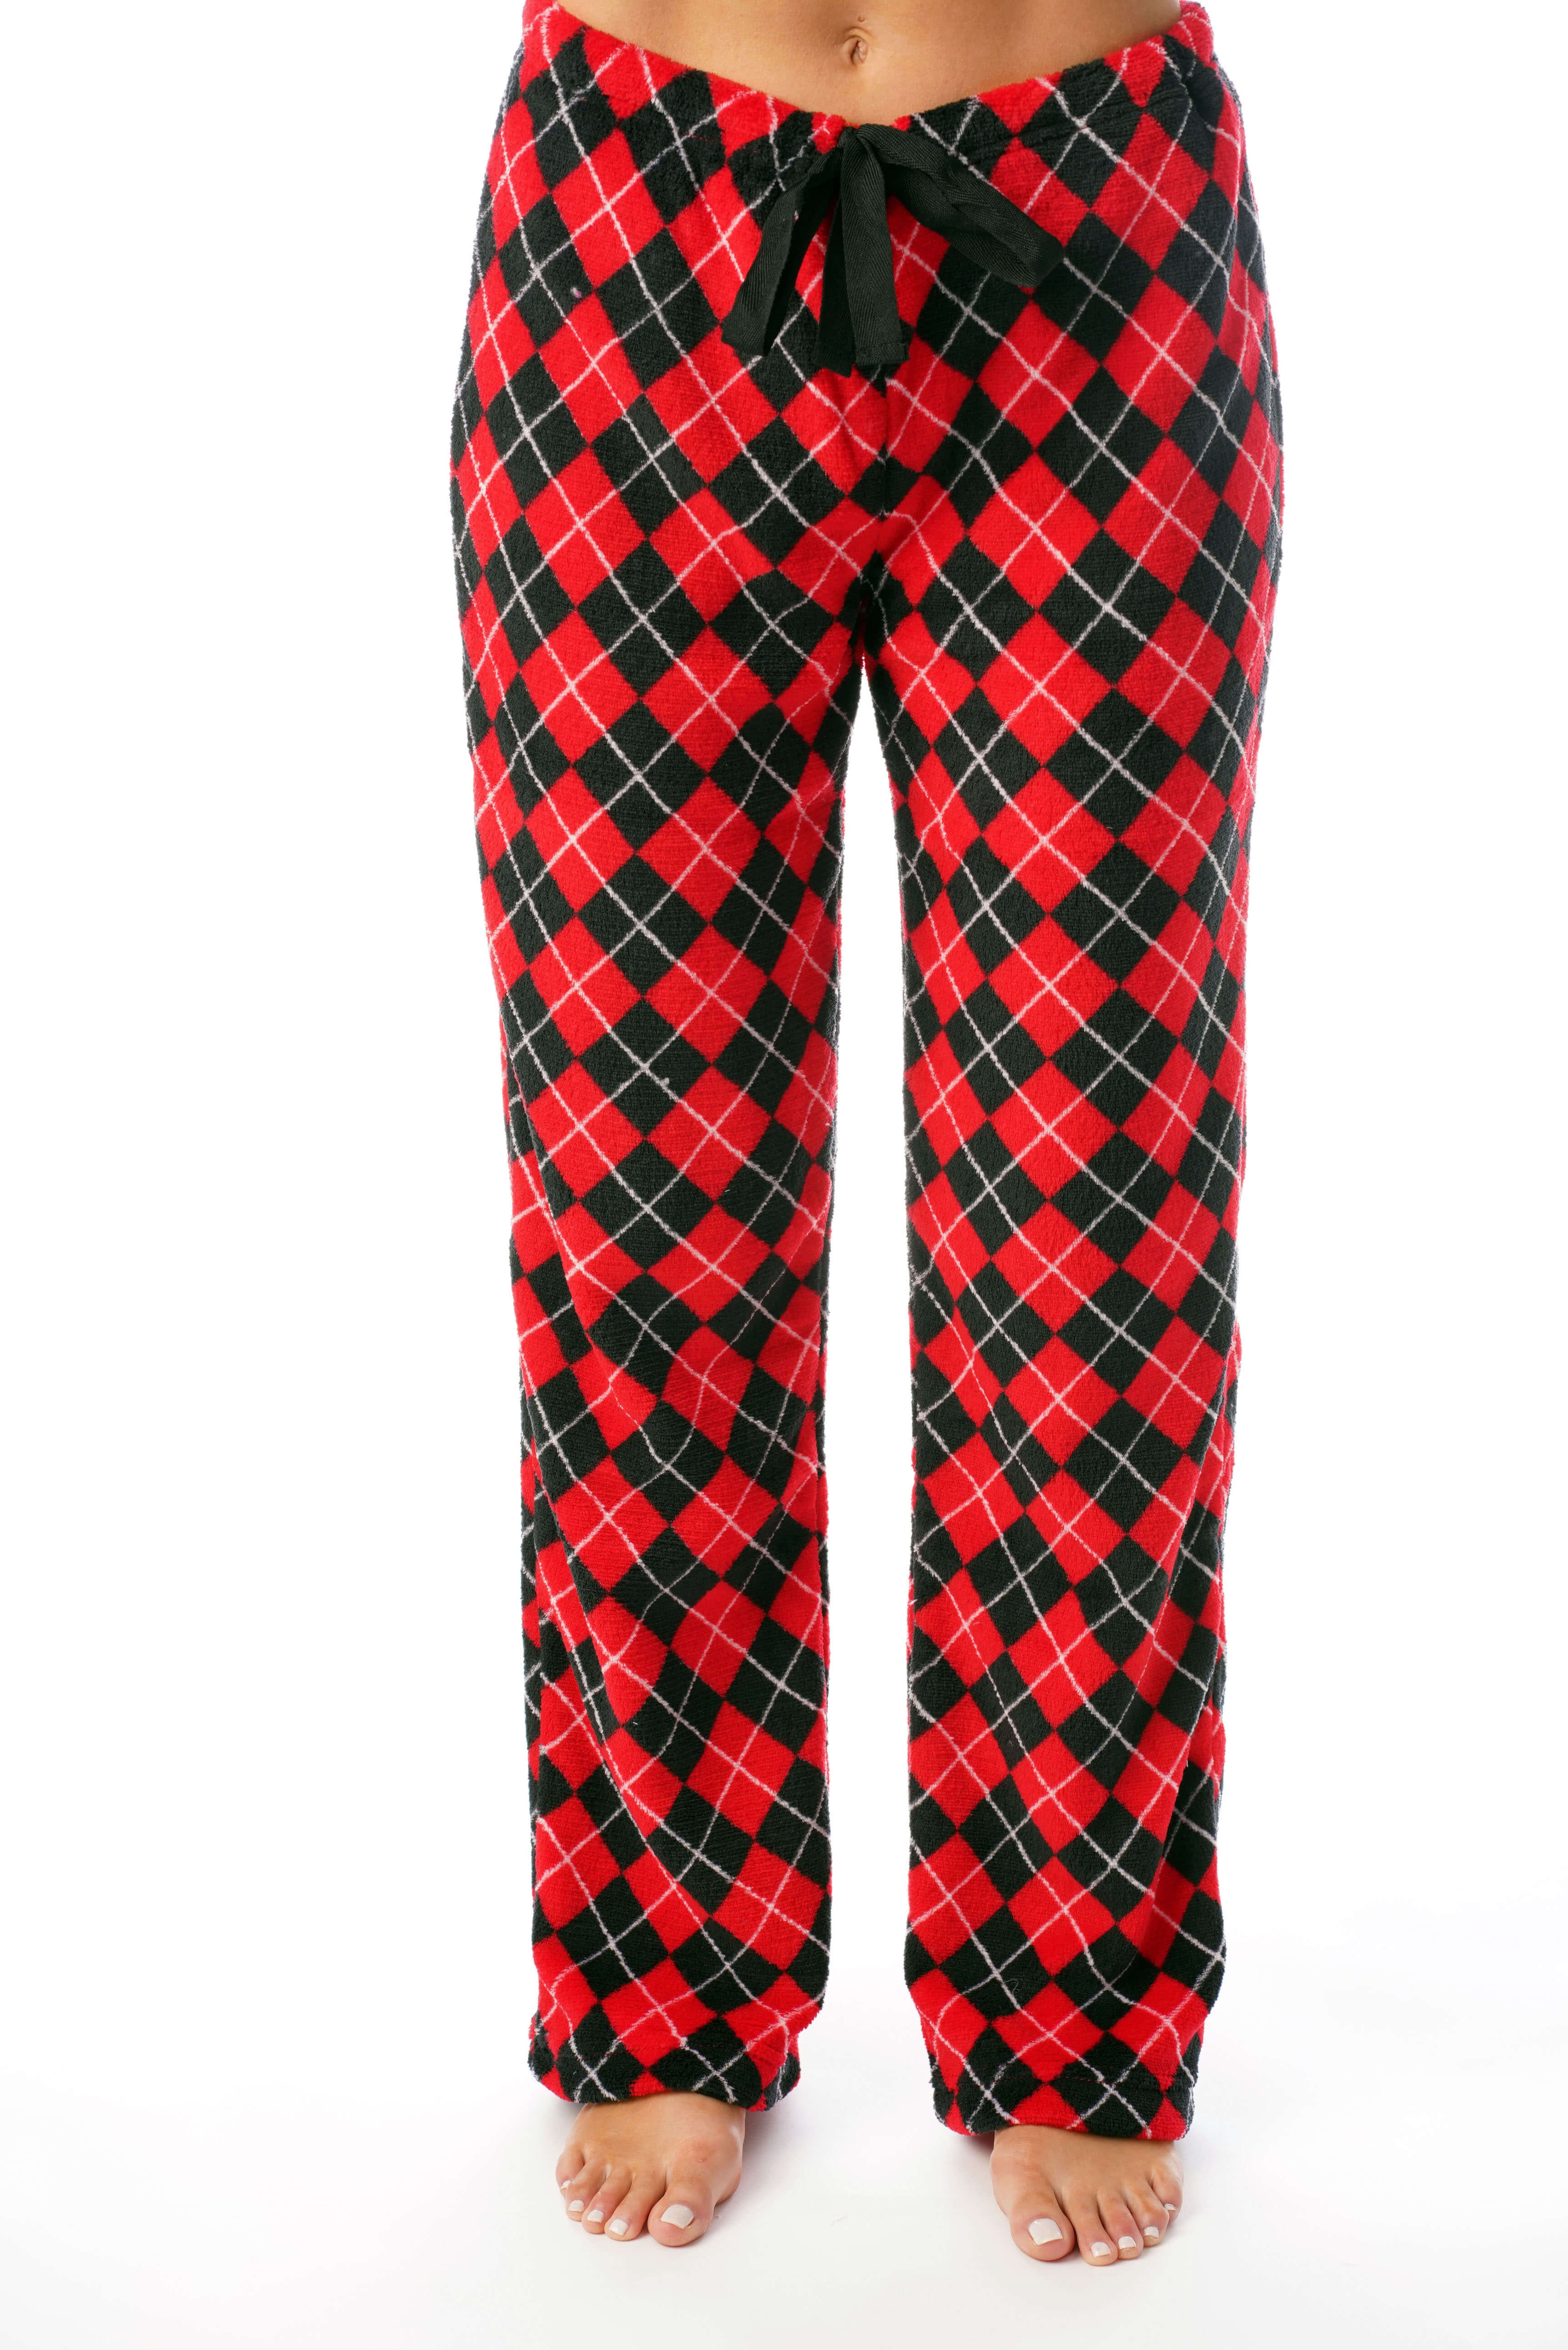 Just Love Women's Plush Pajama Pants - Cozy Lounge Sleepwear (Skulls,  Medium) 